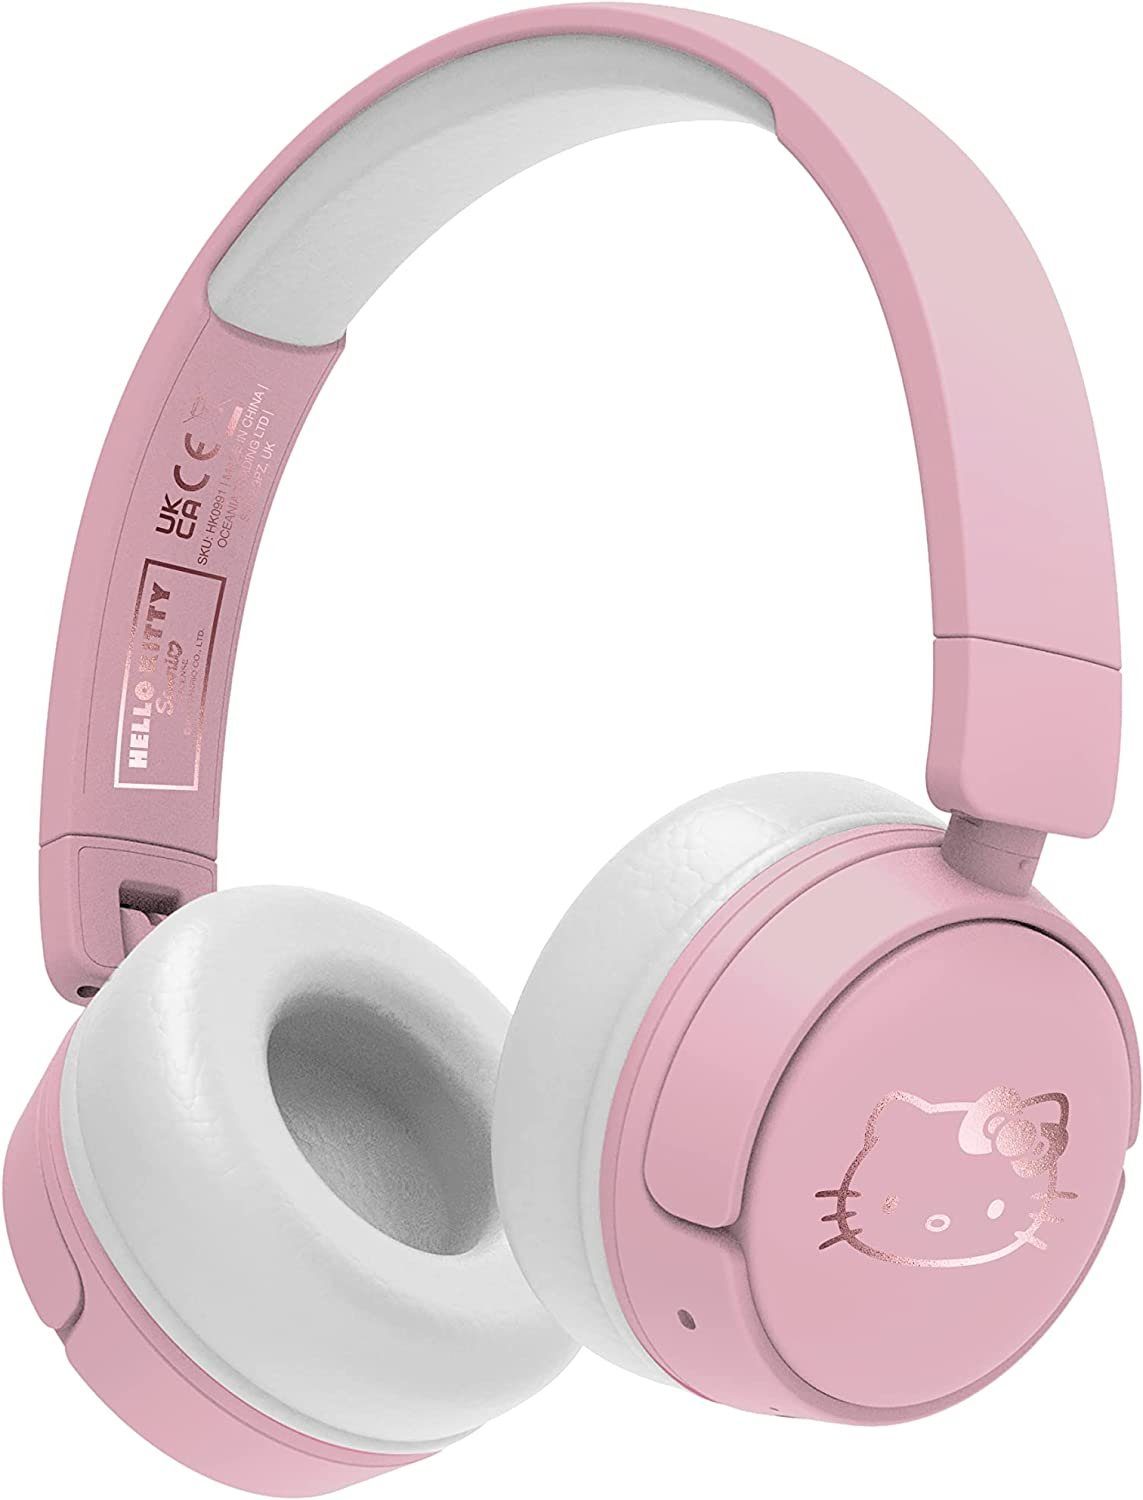 OTL Hello Kitty Bluetooth enthalten) 3,5-mm-Audio-Sharing-Kabel (Bluetooth, Kinder Kopfhörer Bluetooth-Kopfhörer im Lieferumfang